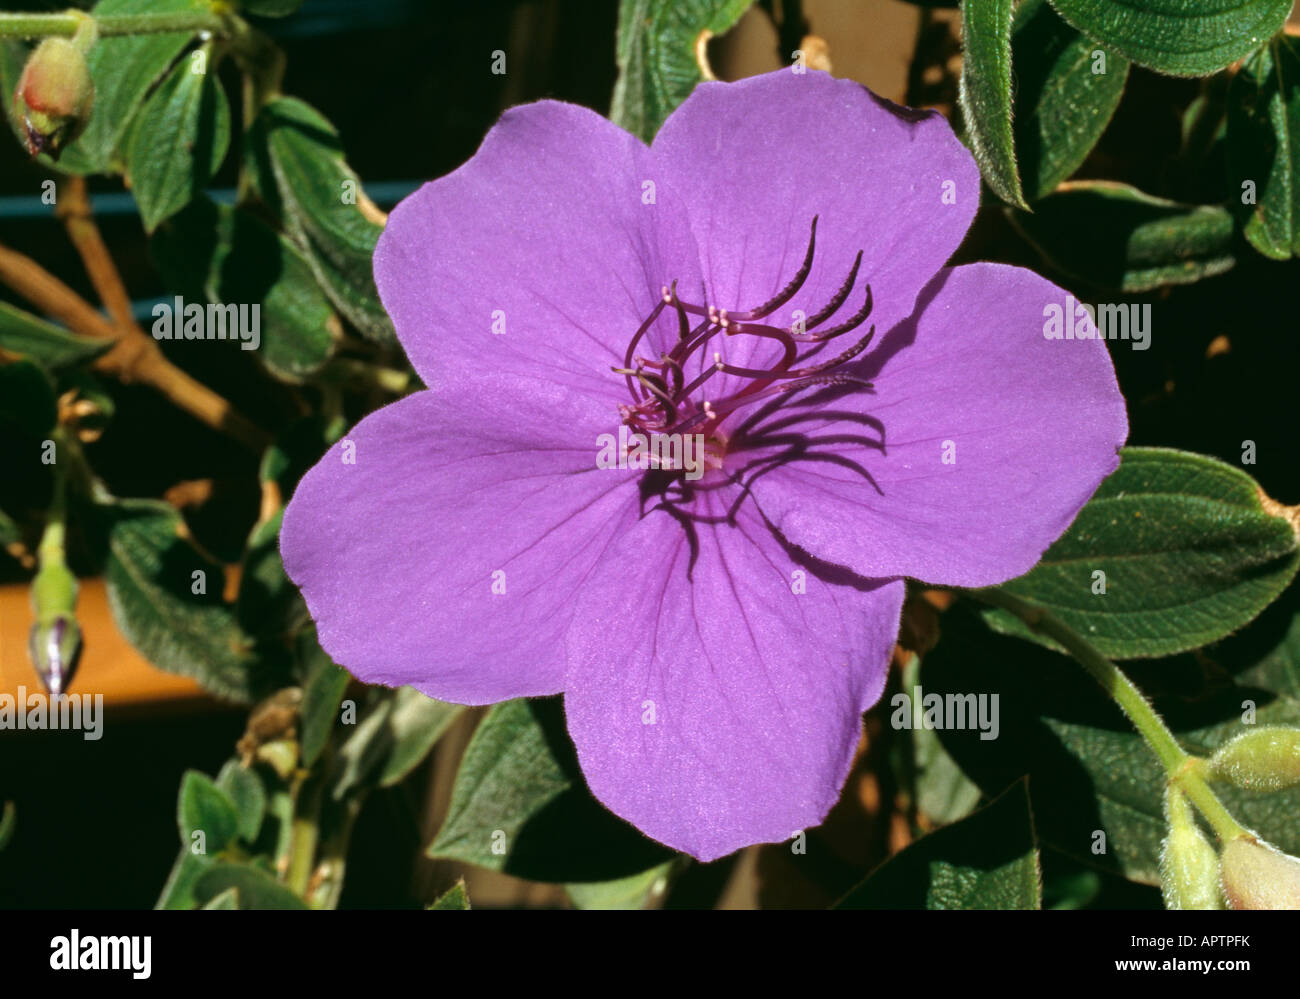 Tibouchina semidecandra purple surprising and spectacular stamens Stock Photo